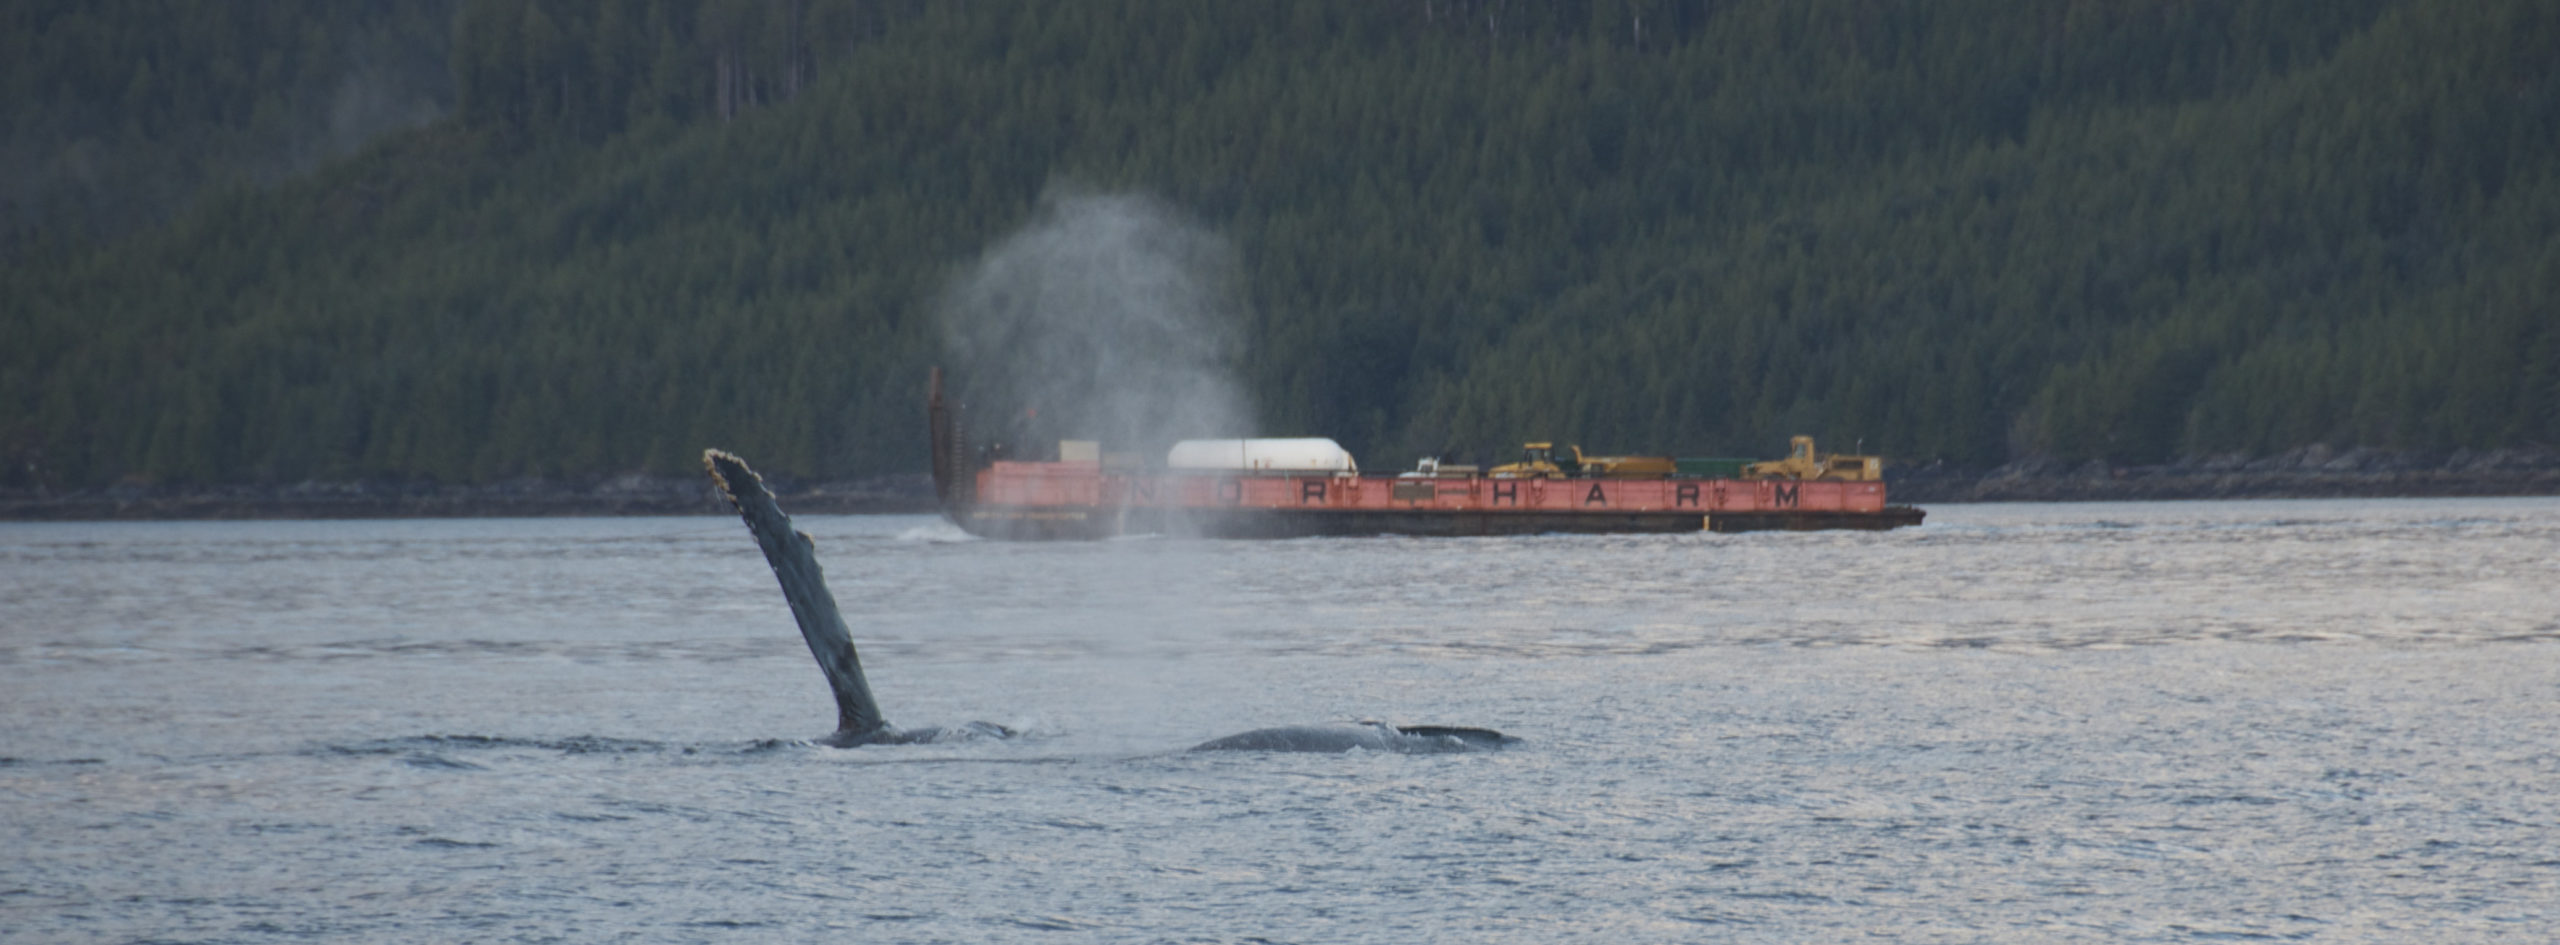 Humpback whale swims near a ship in British Columbia © WWF-Canada / Steph Morgan